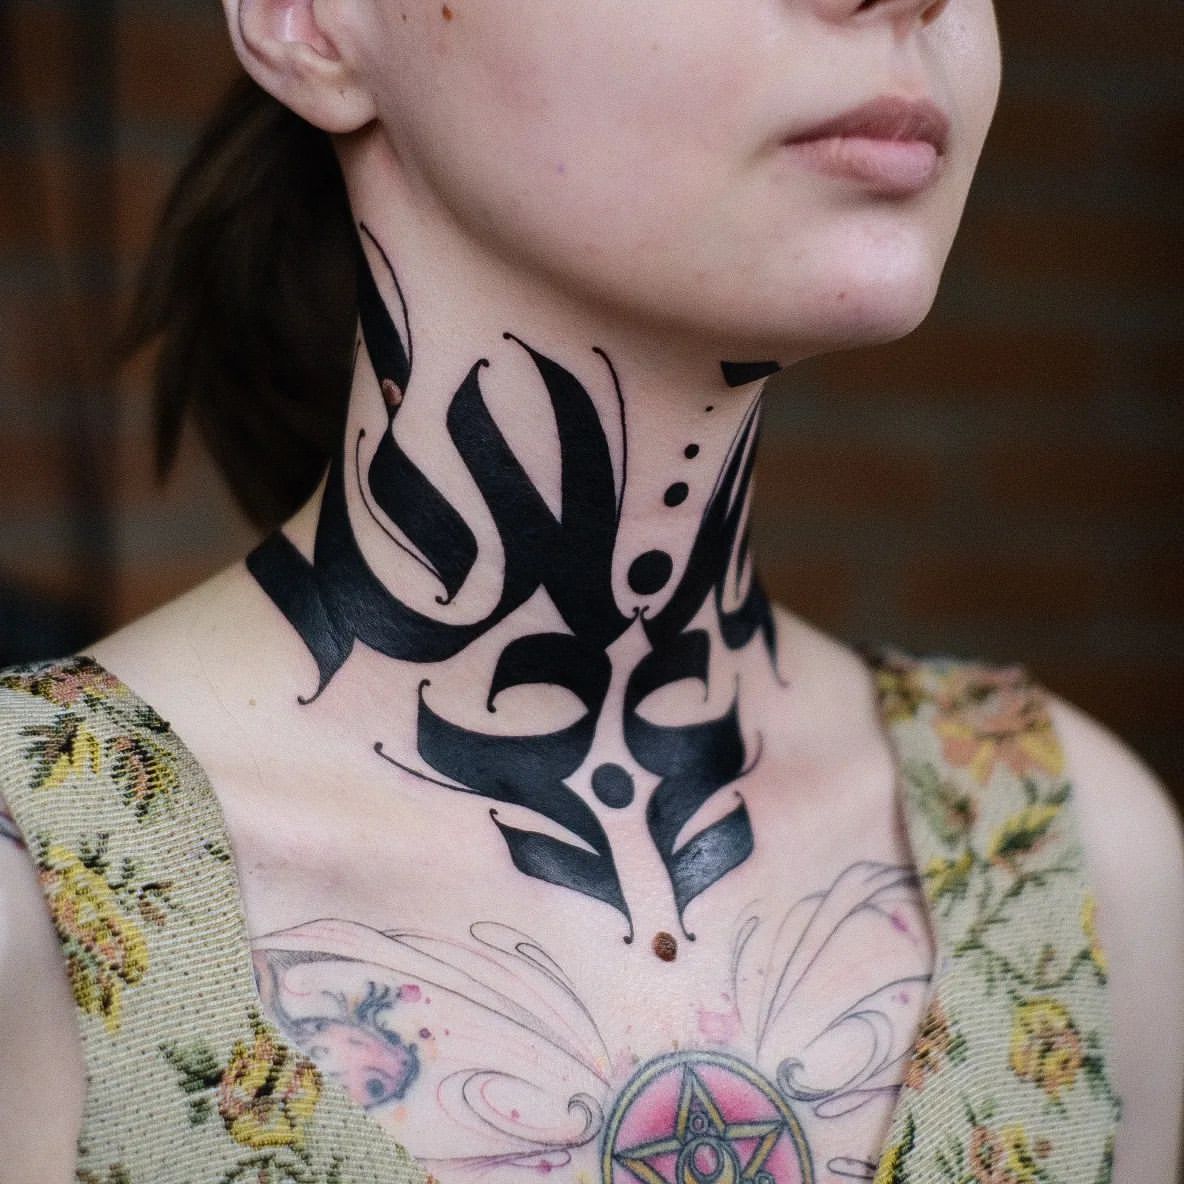 Throat Tattoo Ideas for Women 11